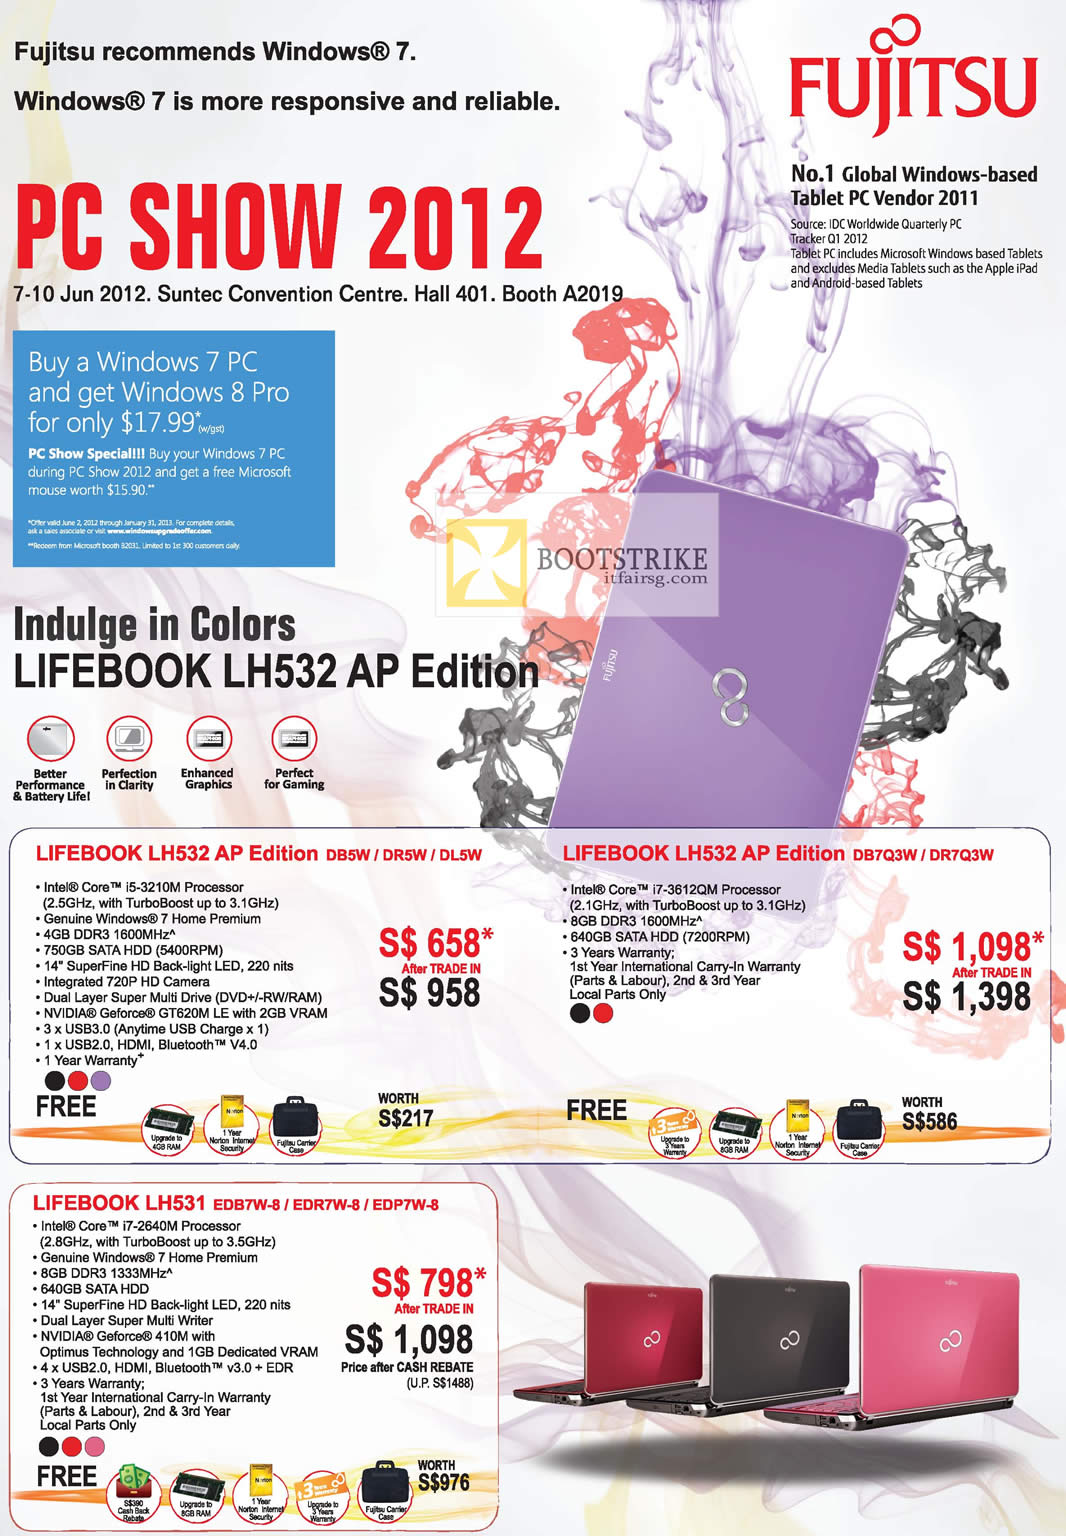 PC SHOW 2012 price list image brochure of Fujitsu Notebooks Lifebook LH532 DB5W DR5W DL5W, LH532 DB7Q3W DR7Q3W, LH531 EDB7W-8 EDR7W-8 EDP7W-8